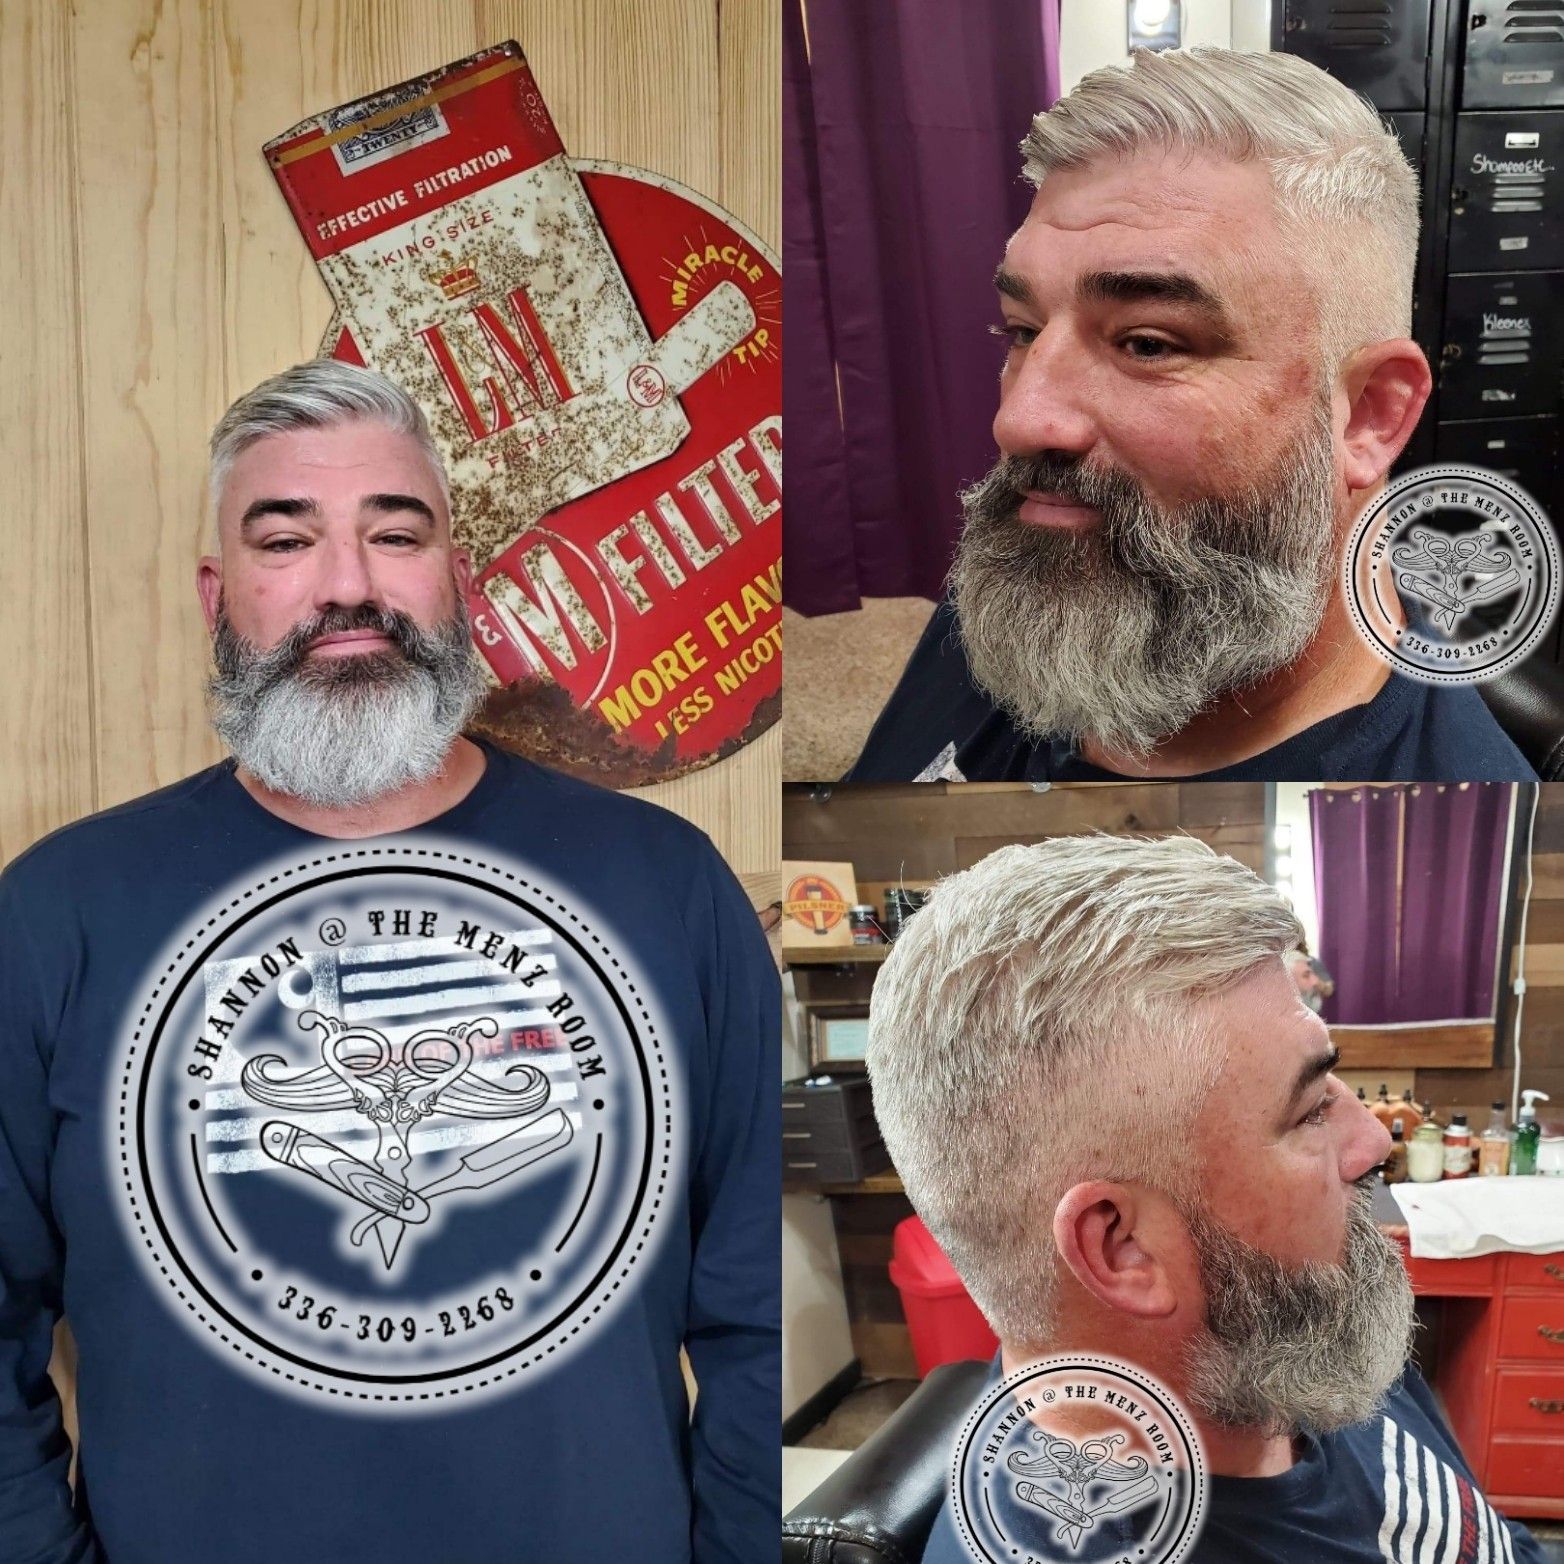 Men's HairCut + Beard Maintenance portfolio